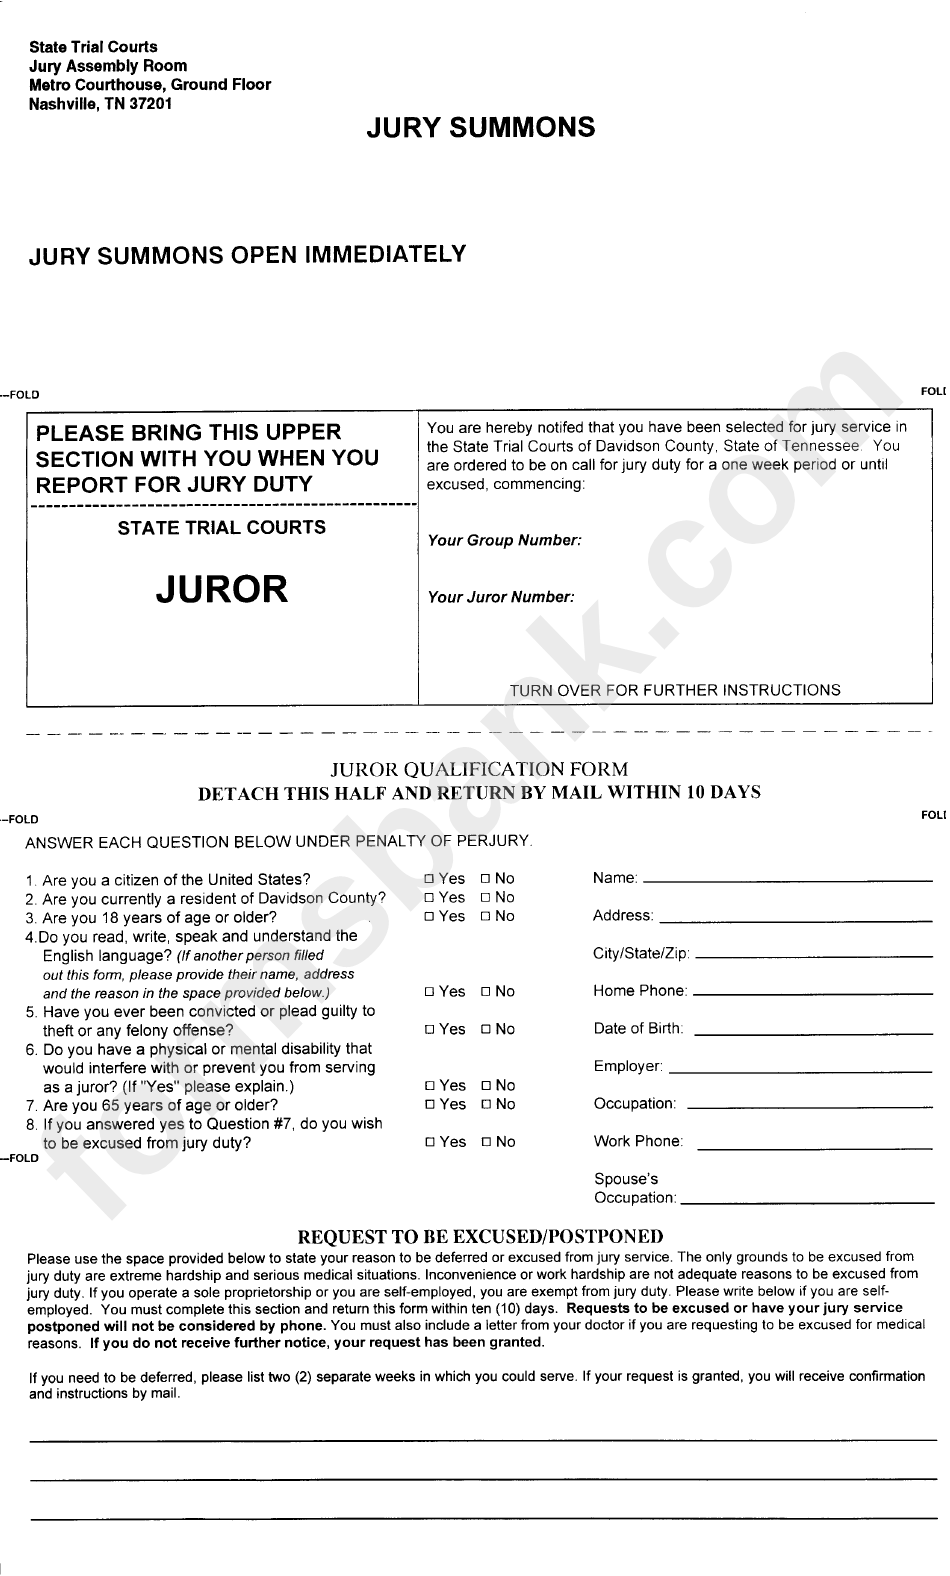 Juror Qualification Form - Jury Summons